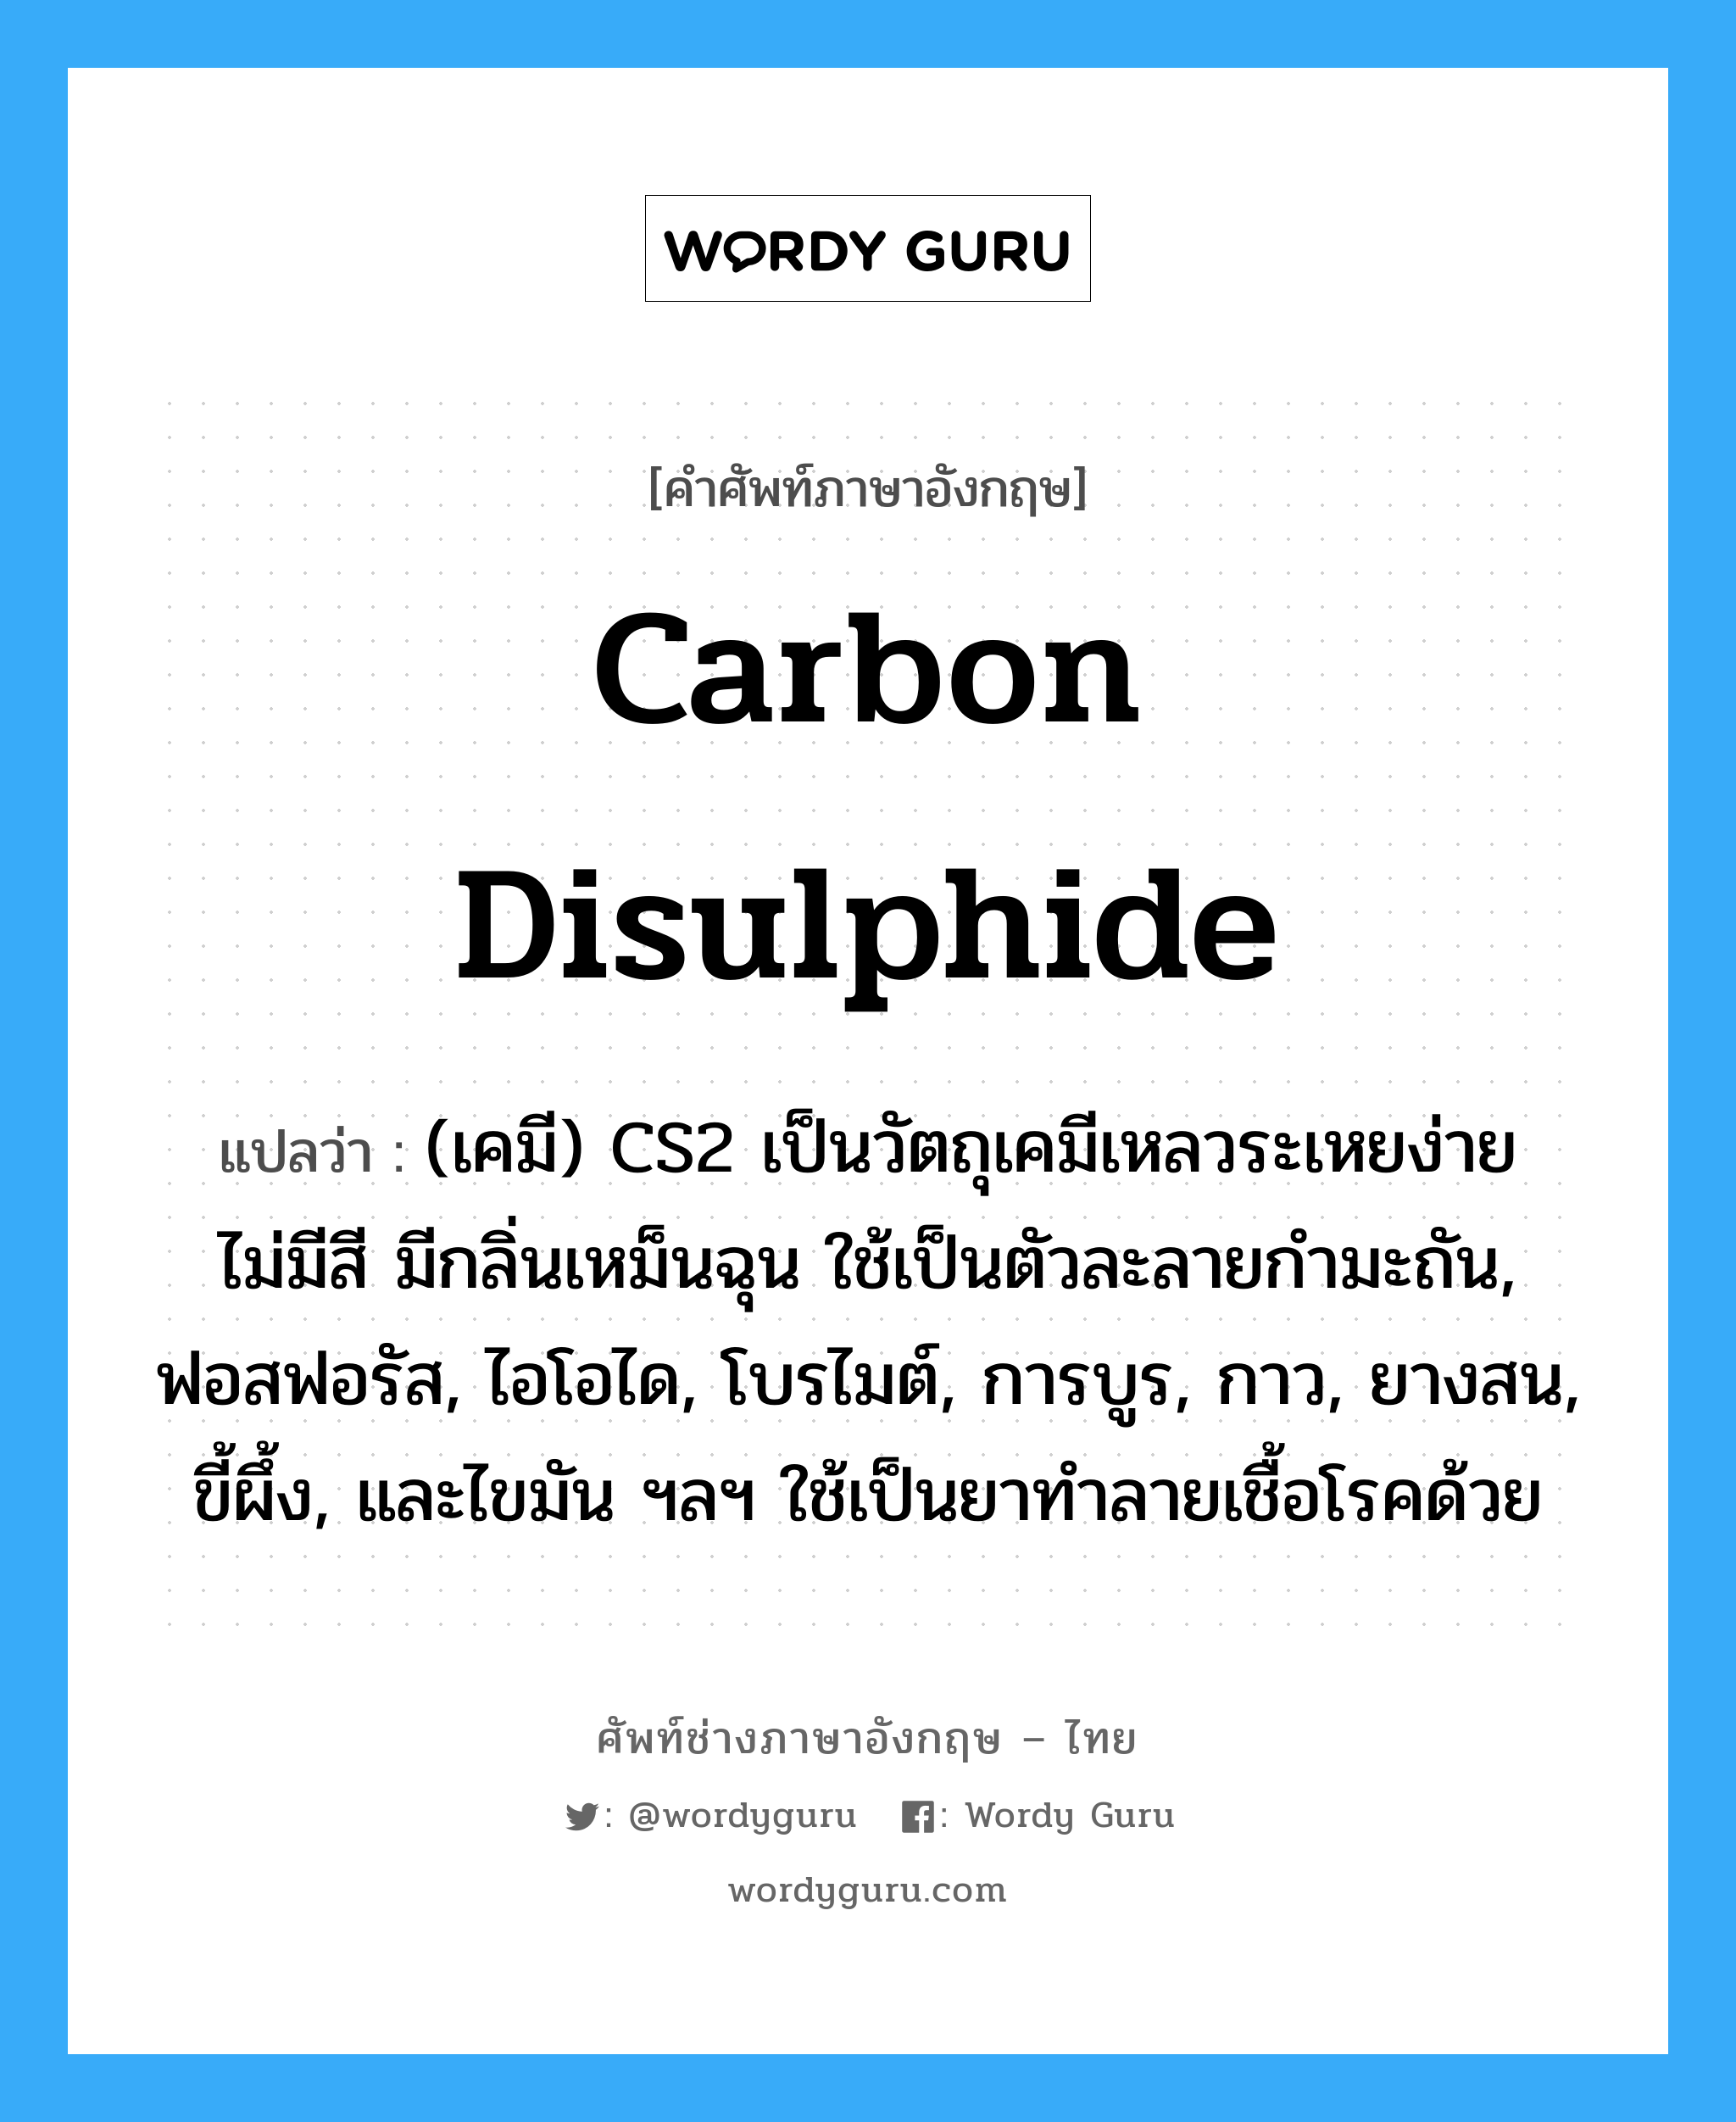 carbon disulphide แปลว่า?, คำศัพท์ช่างภาษาอังกฤษ - ไทย carbon disulphide คำศัพท์ภาษาอังกฤษ carbon disulphide แปลว่า (เคมี) CS2 เป็นวัตถุเคมีเหลวระเหยง่าย ไม่มีสี มีกลิ่นเหม็นฉุน ใช้เป็นตัวละลายกำมะถัน, ฟอสฟอรัส, ไอโอได, โบรไมต์, การบูร, กาว, ยางสน, ขี้ผึ้ง, และไขมัน ฯลฯ ใช้เป็นยาทำลายเชื้อโรคด้วย